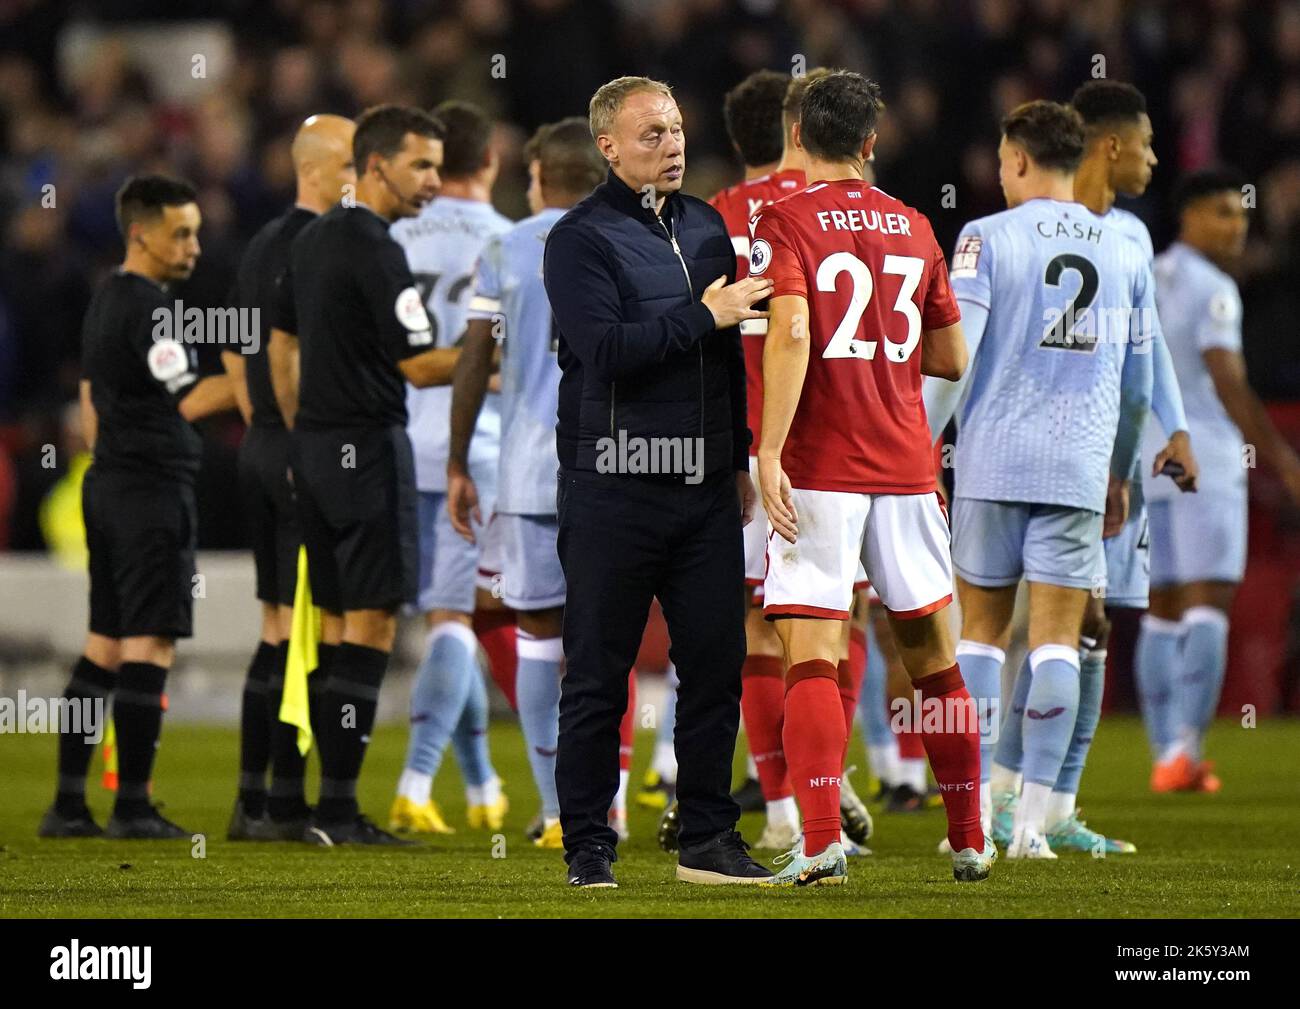 El gerente de Nottingham Forest, Steve Cooper, saluda a Remo Freuler tras el partido de la Premier League en City Ground, Nottingham. Fecha de la foto: Lunes 10 de octubre de 2022. Foto de stock